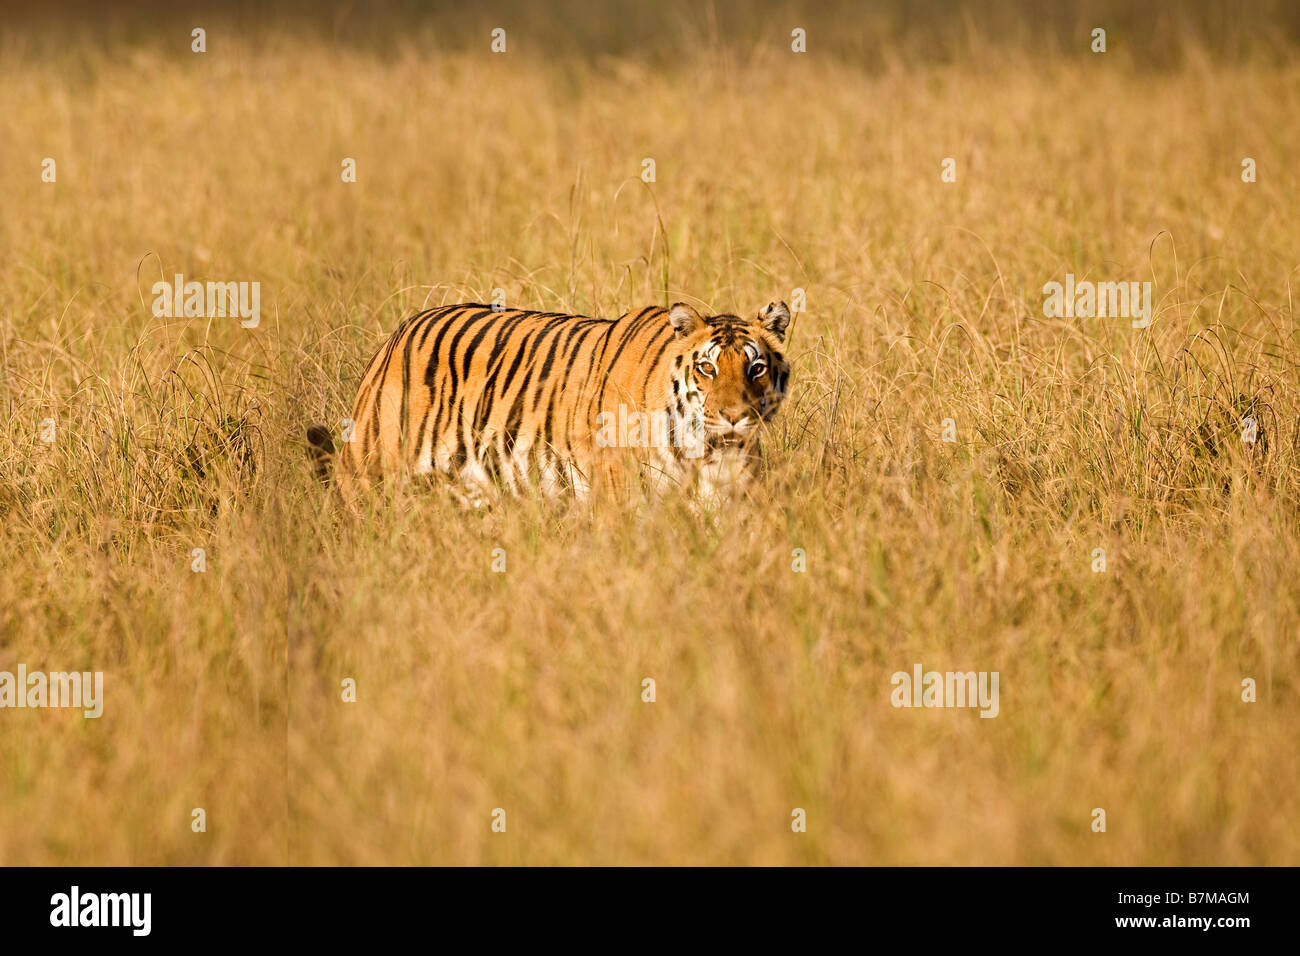 Royal Bengal Tiger in Morgensonne Sonne lange Gras Kanha National Park Madhya Pradesh nördlichen Indien Asien Stockfoto